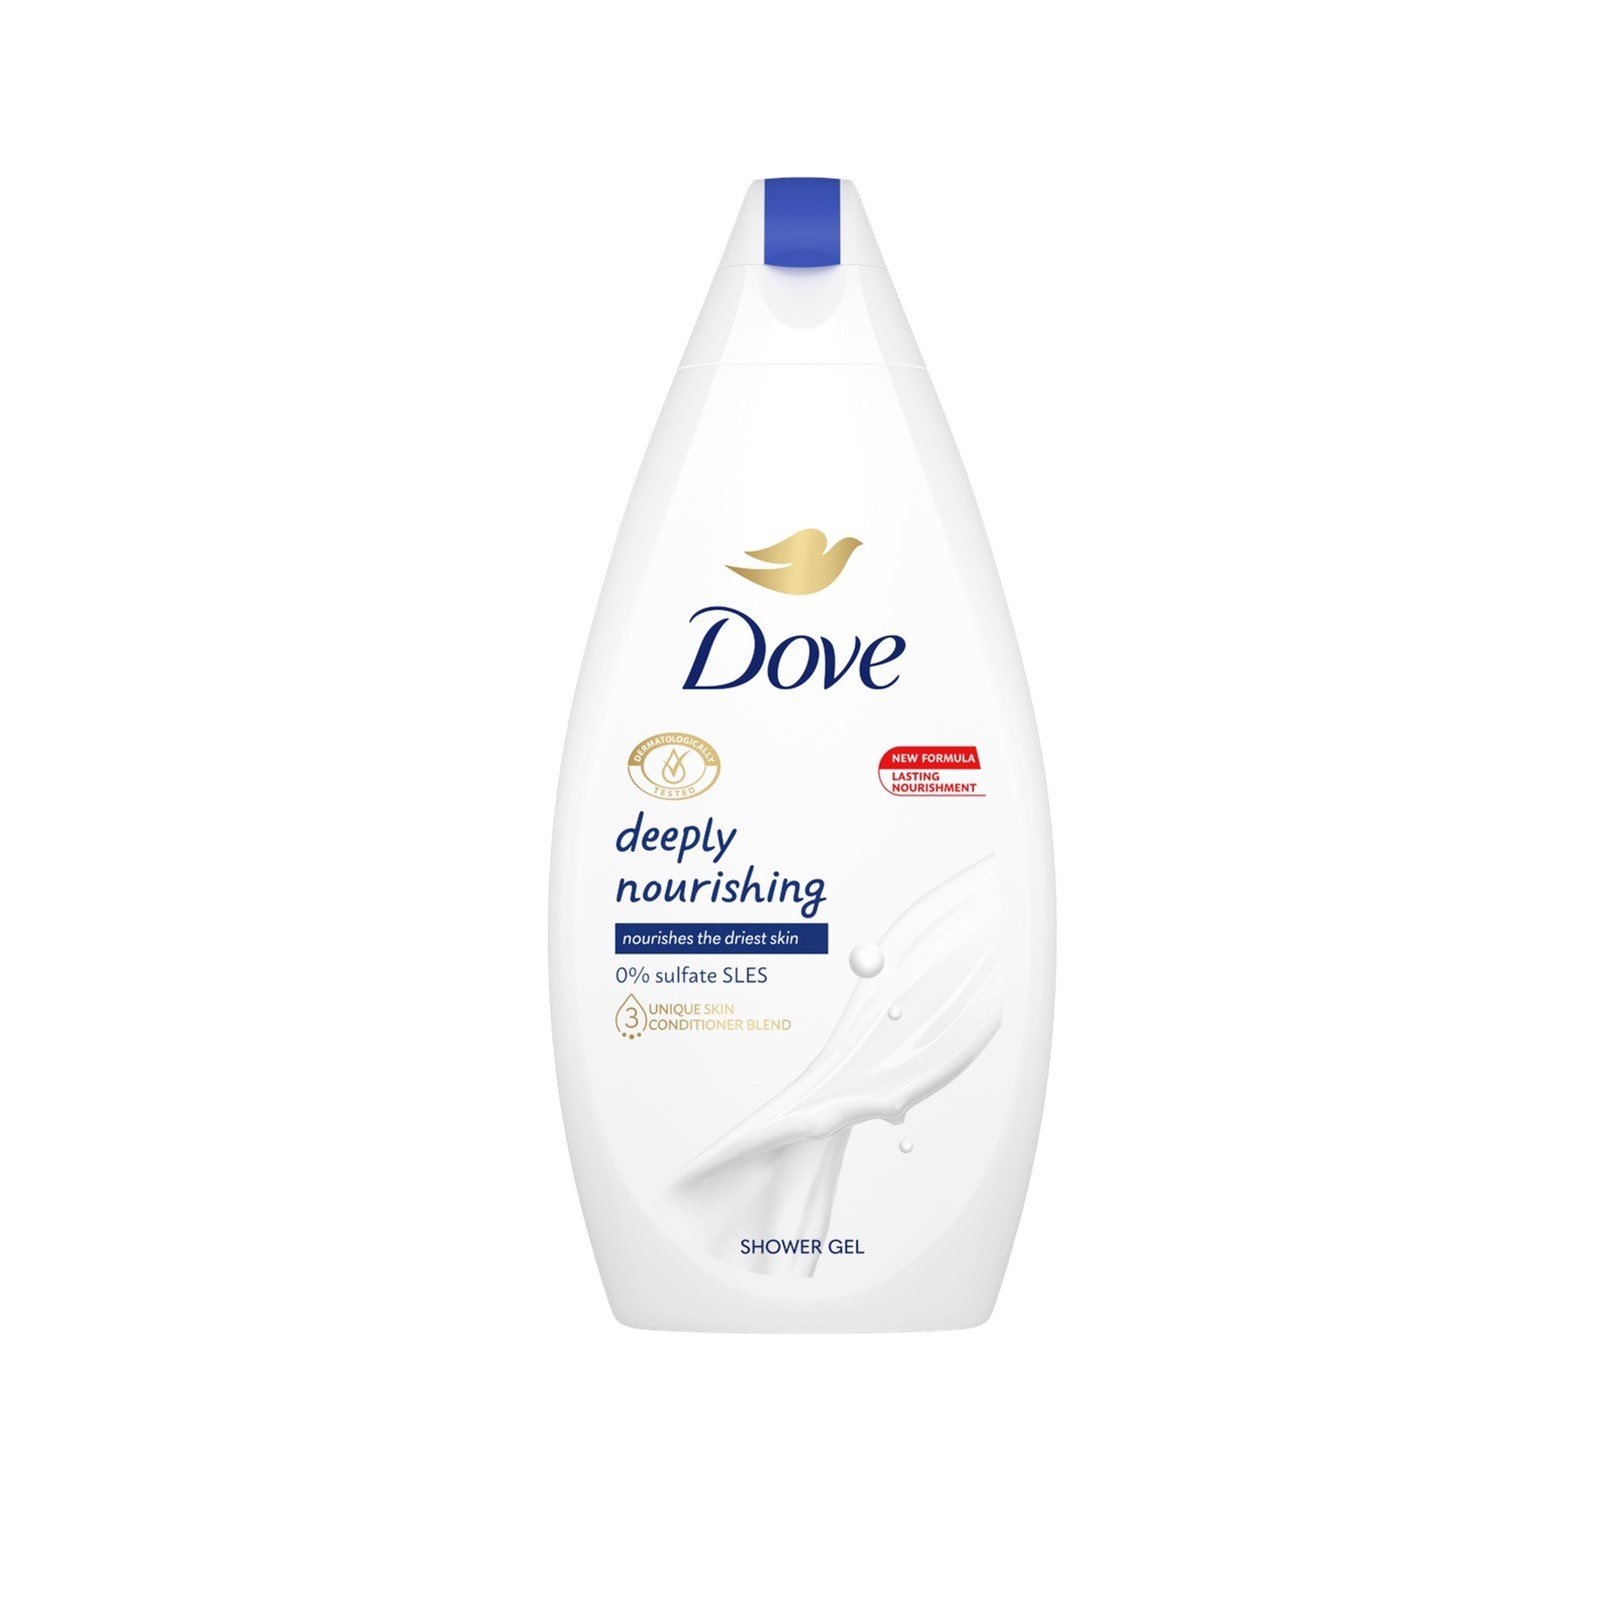 dove-deeply-nourishing-shower-gel-450ml.jpg